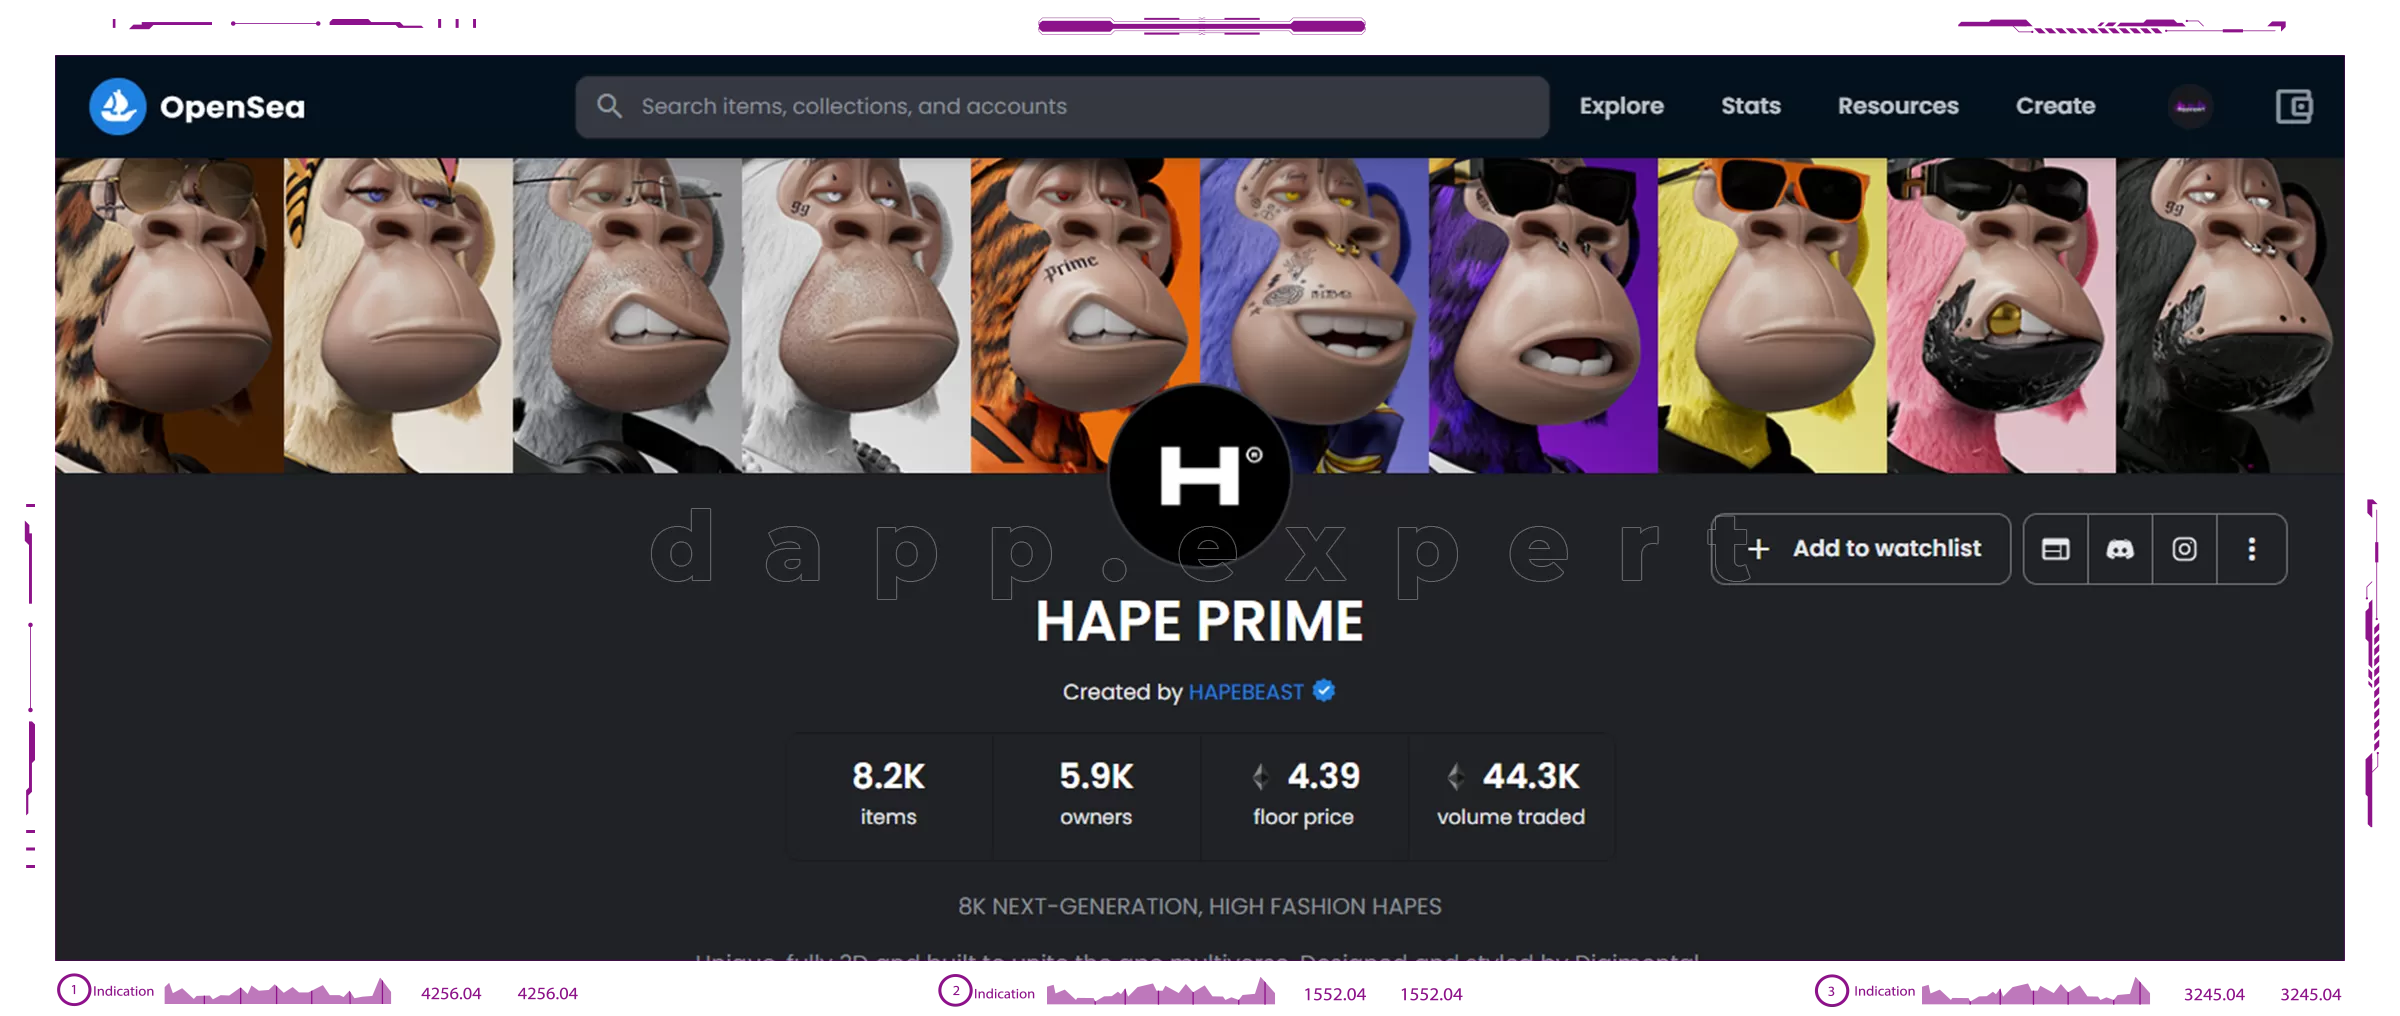 HAPE Prime dapps